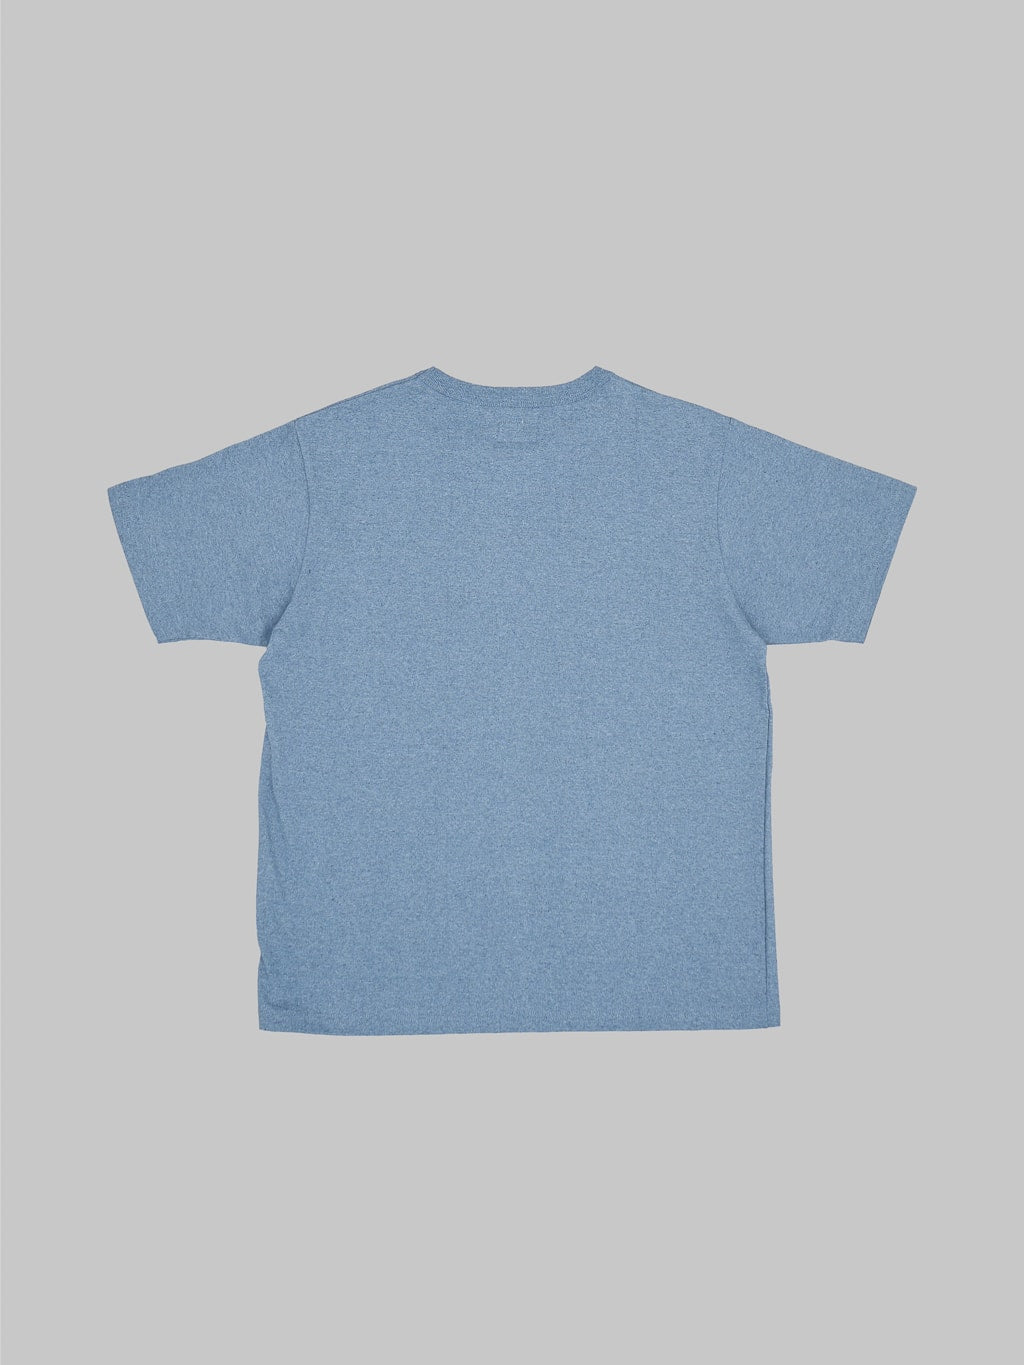 Japan Blue Recycled Denim Tshirt mid Indigo back